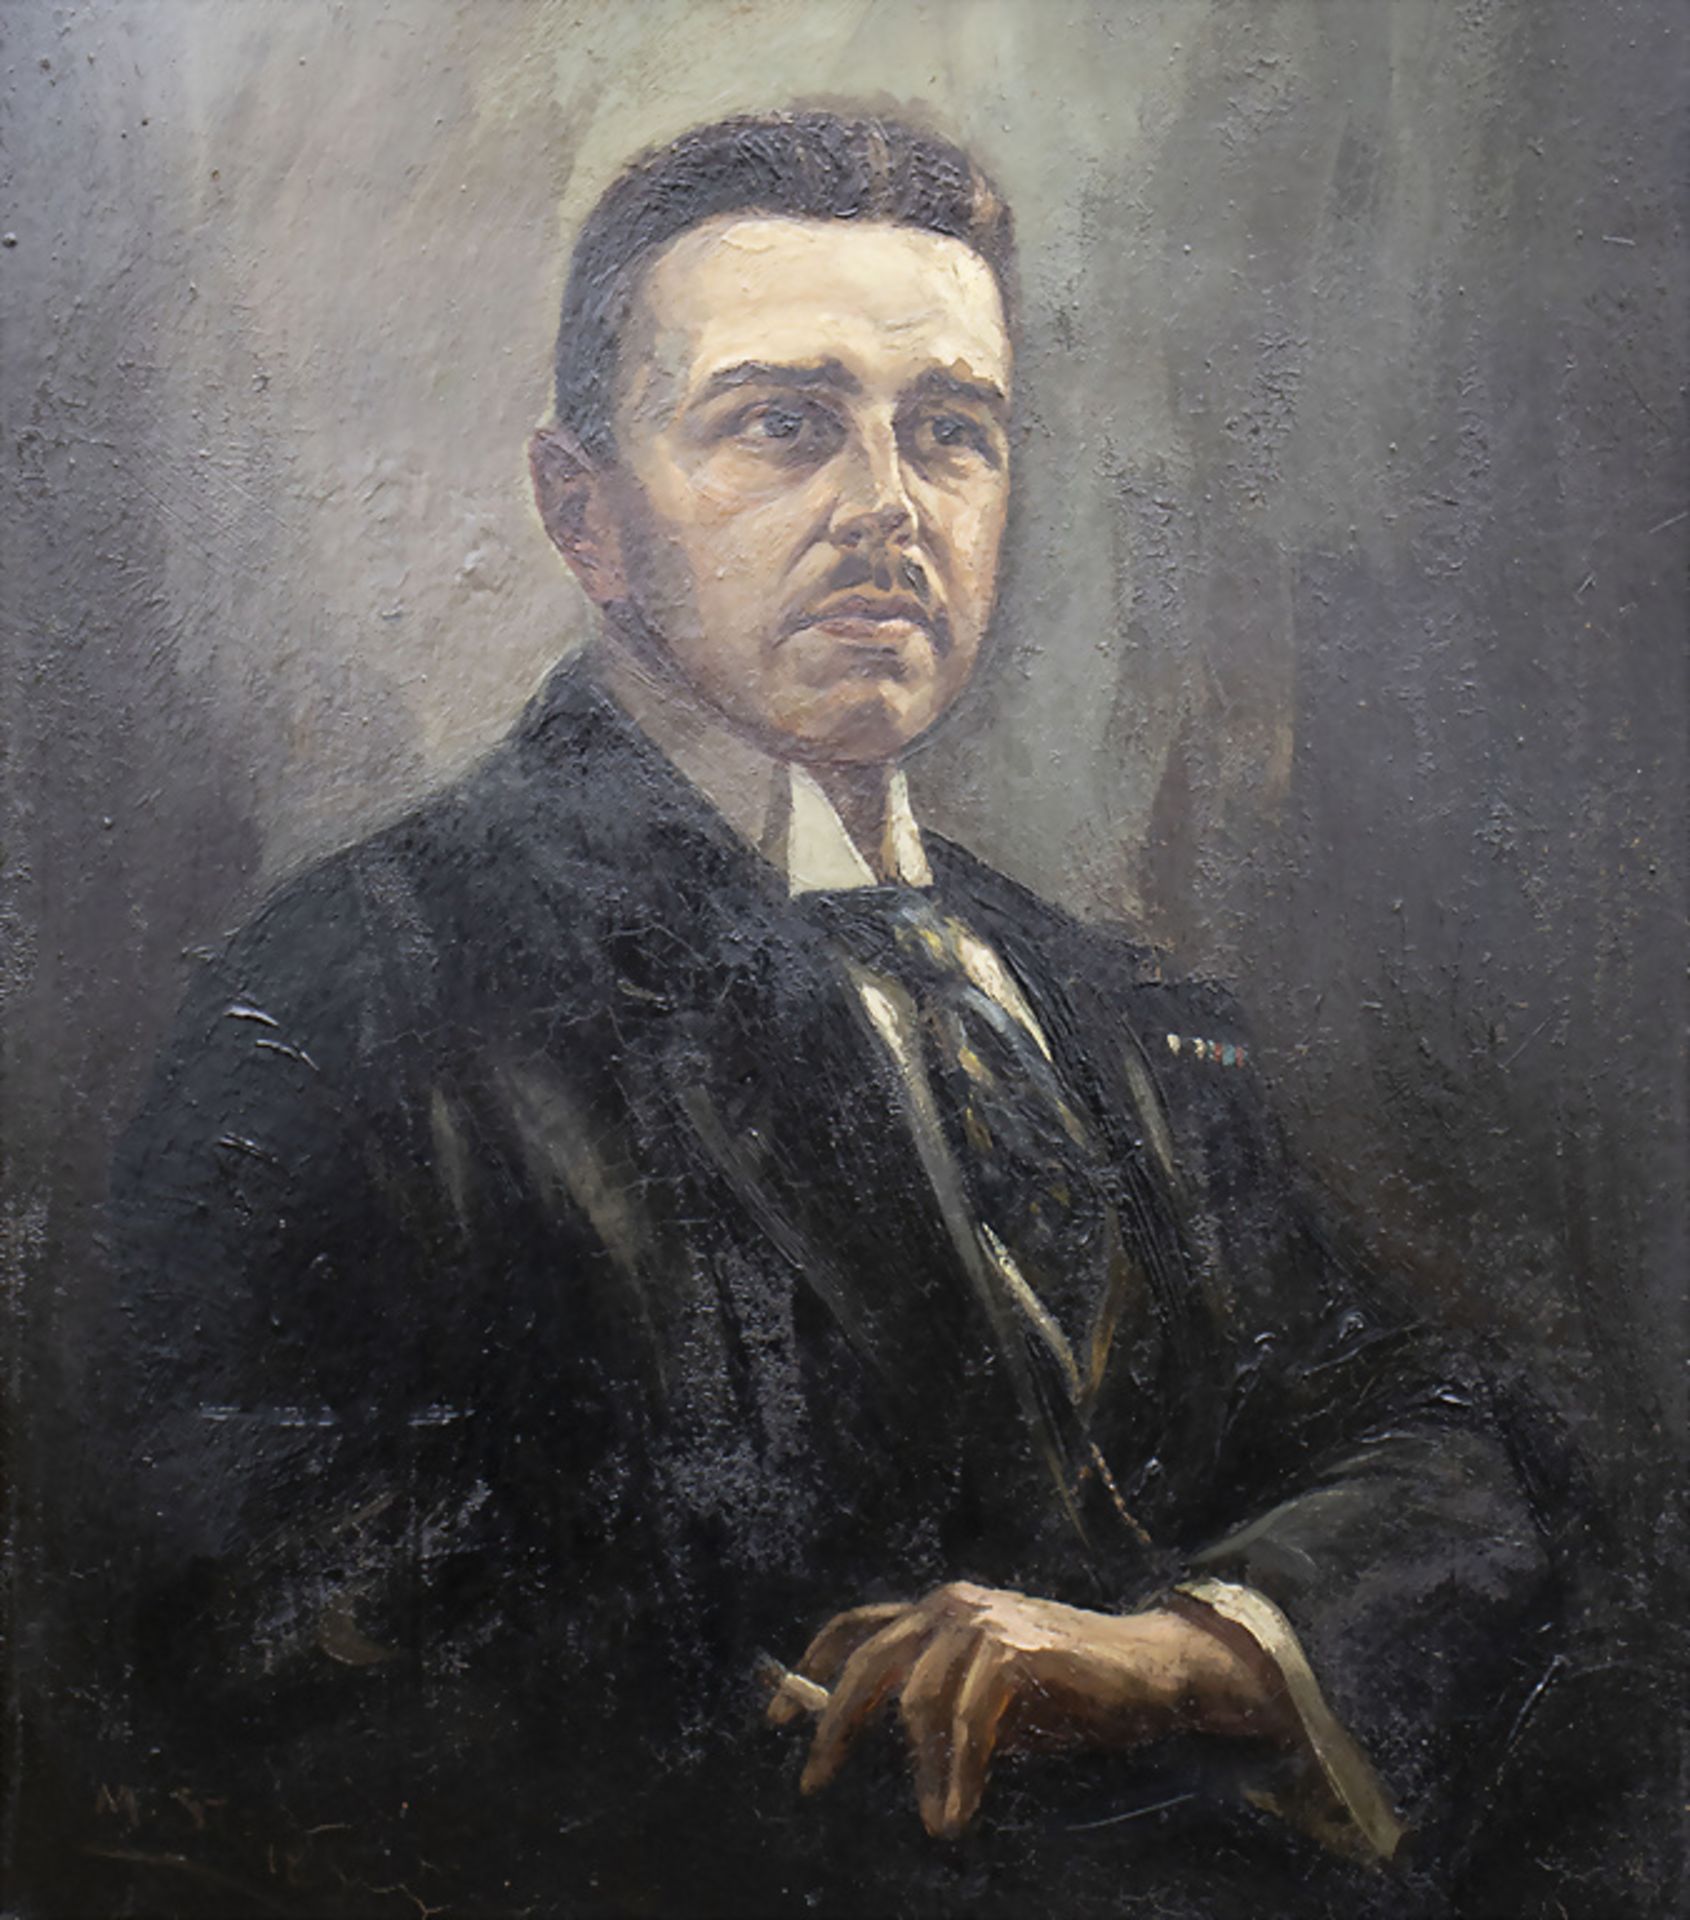 Max SLEVOGT (1898-1932), 'Elegantes Herrenporträt' / 'An elegant portrait of a gentleman', 1918